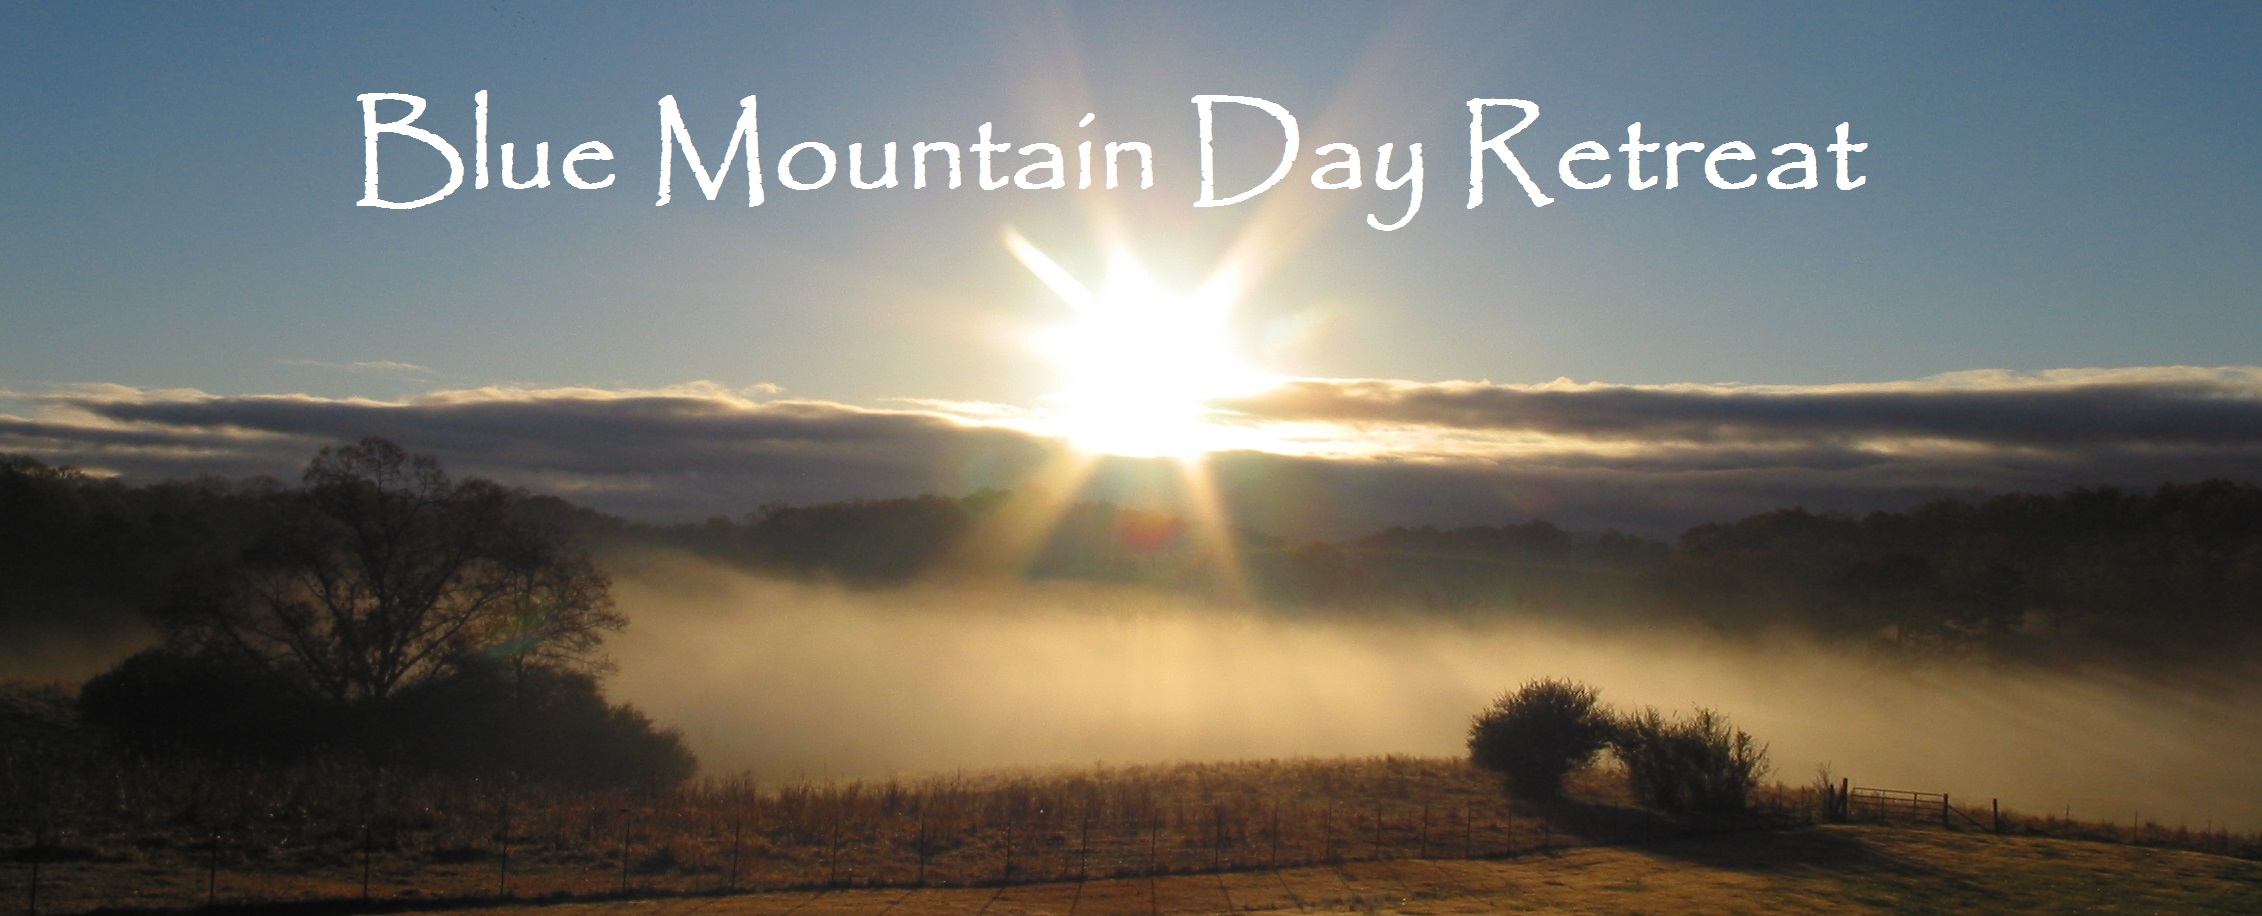 Blue Mountain Day Retreat Image